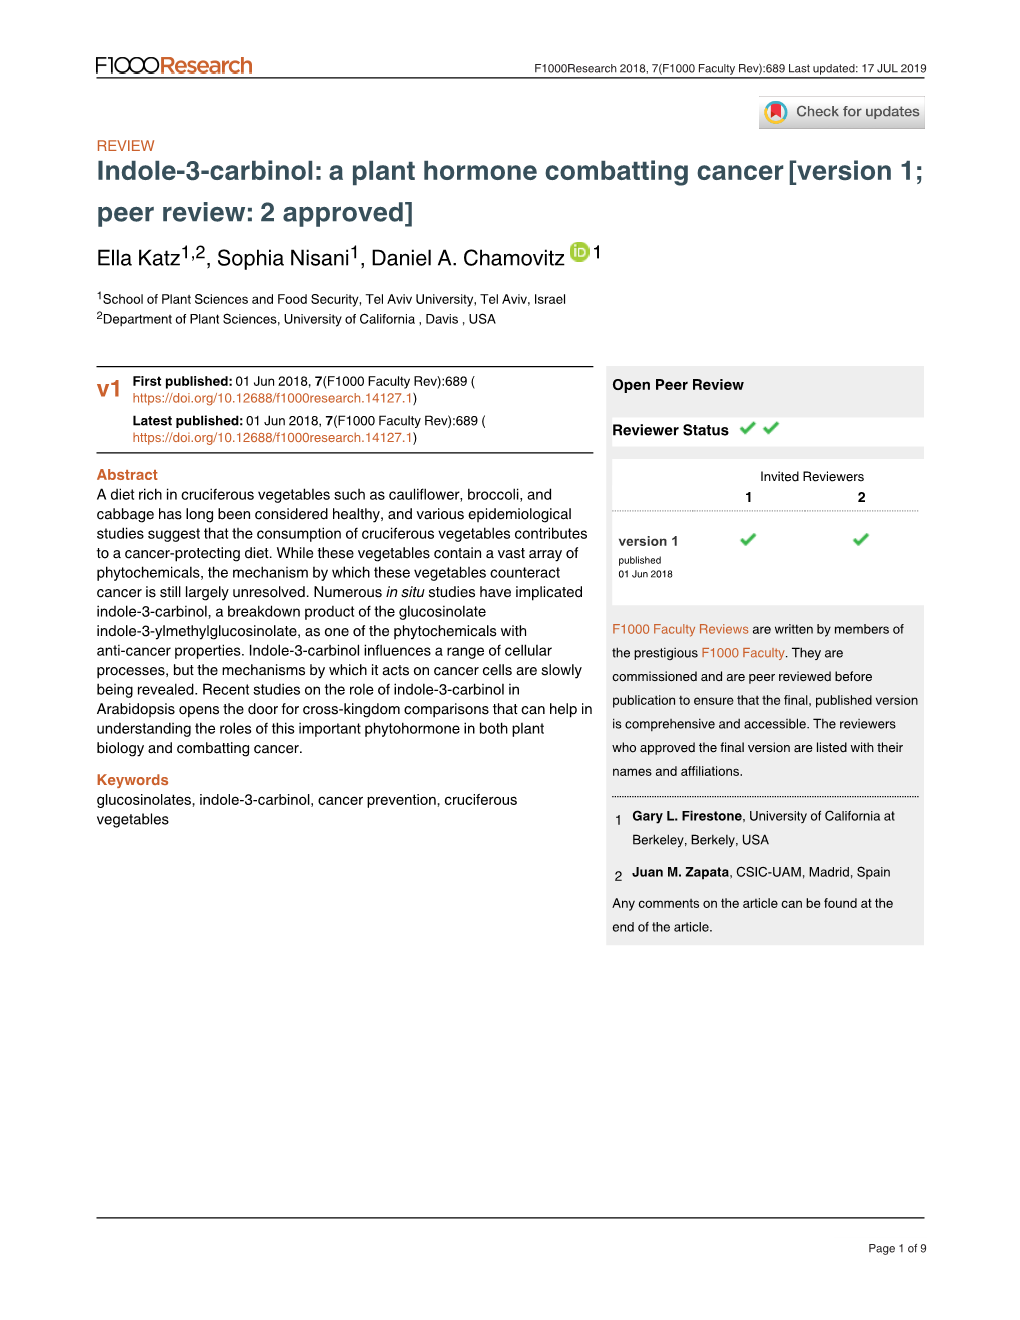 Indole-3-Carbinol: a Plant Hormone Combatting Cancer[Version 1; Peer